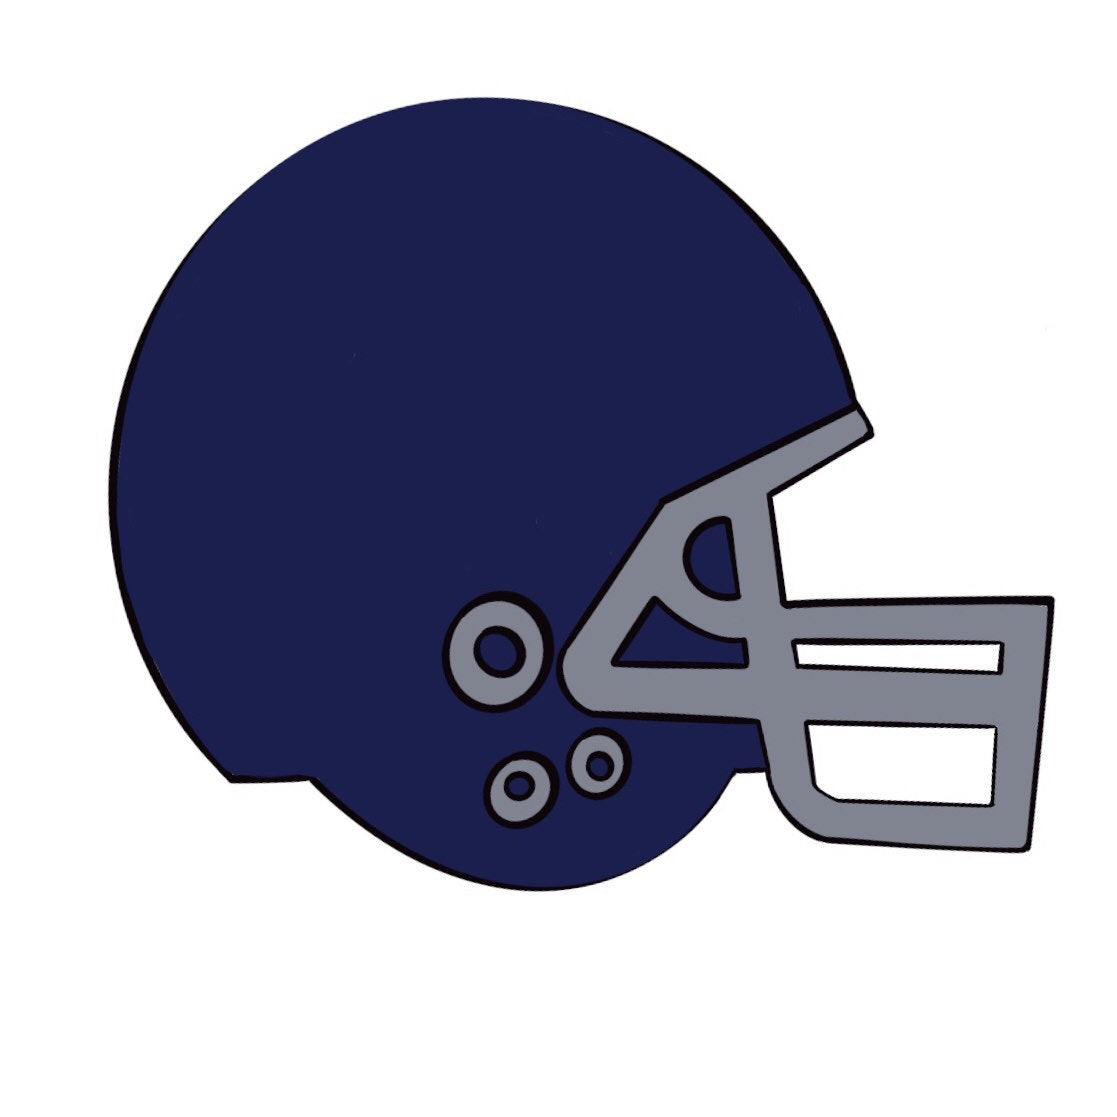 cartoon football helmet